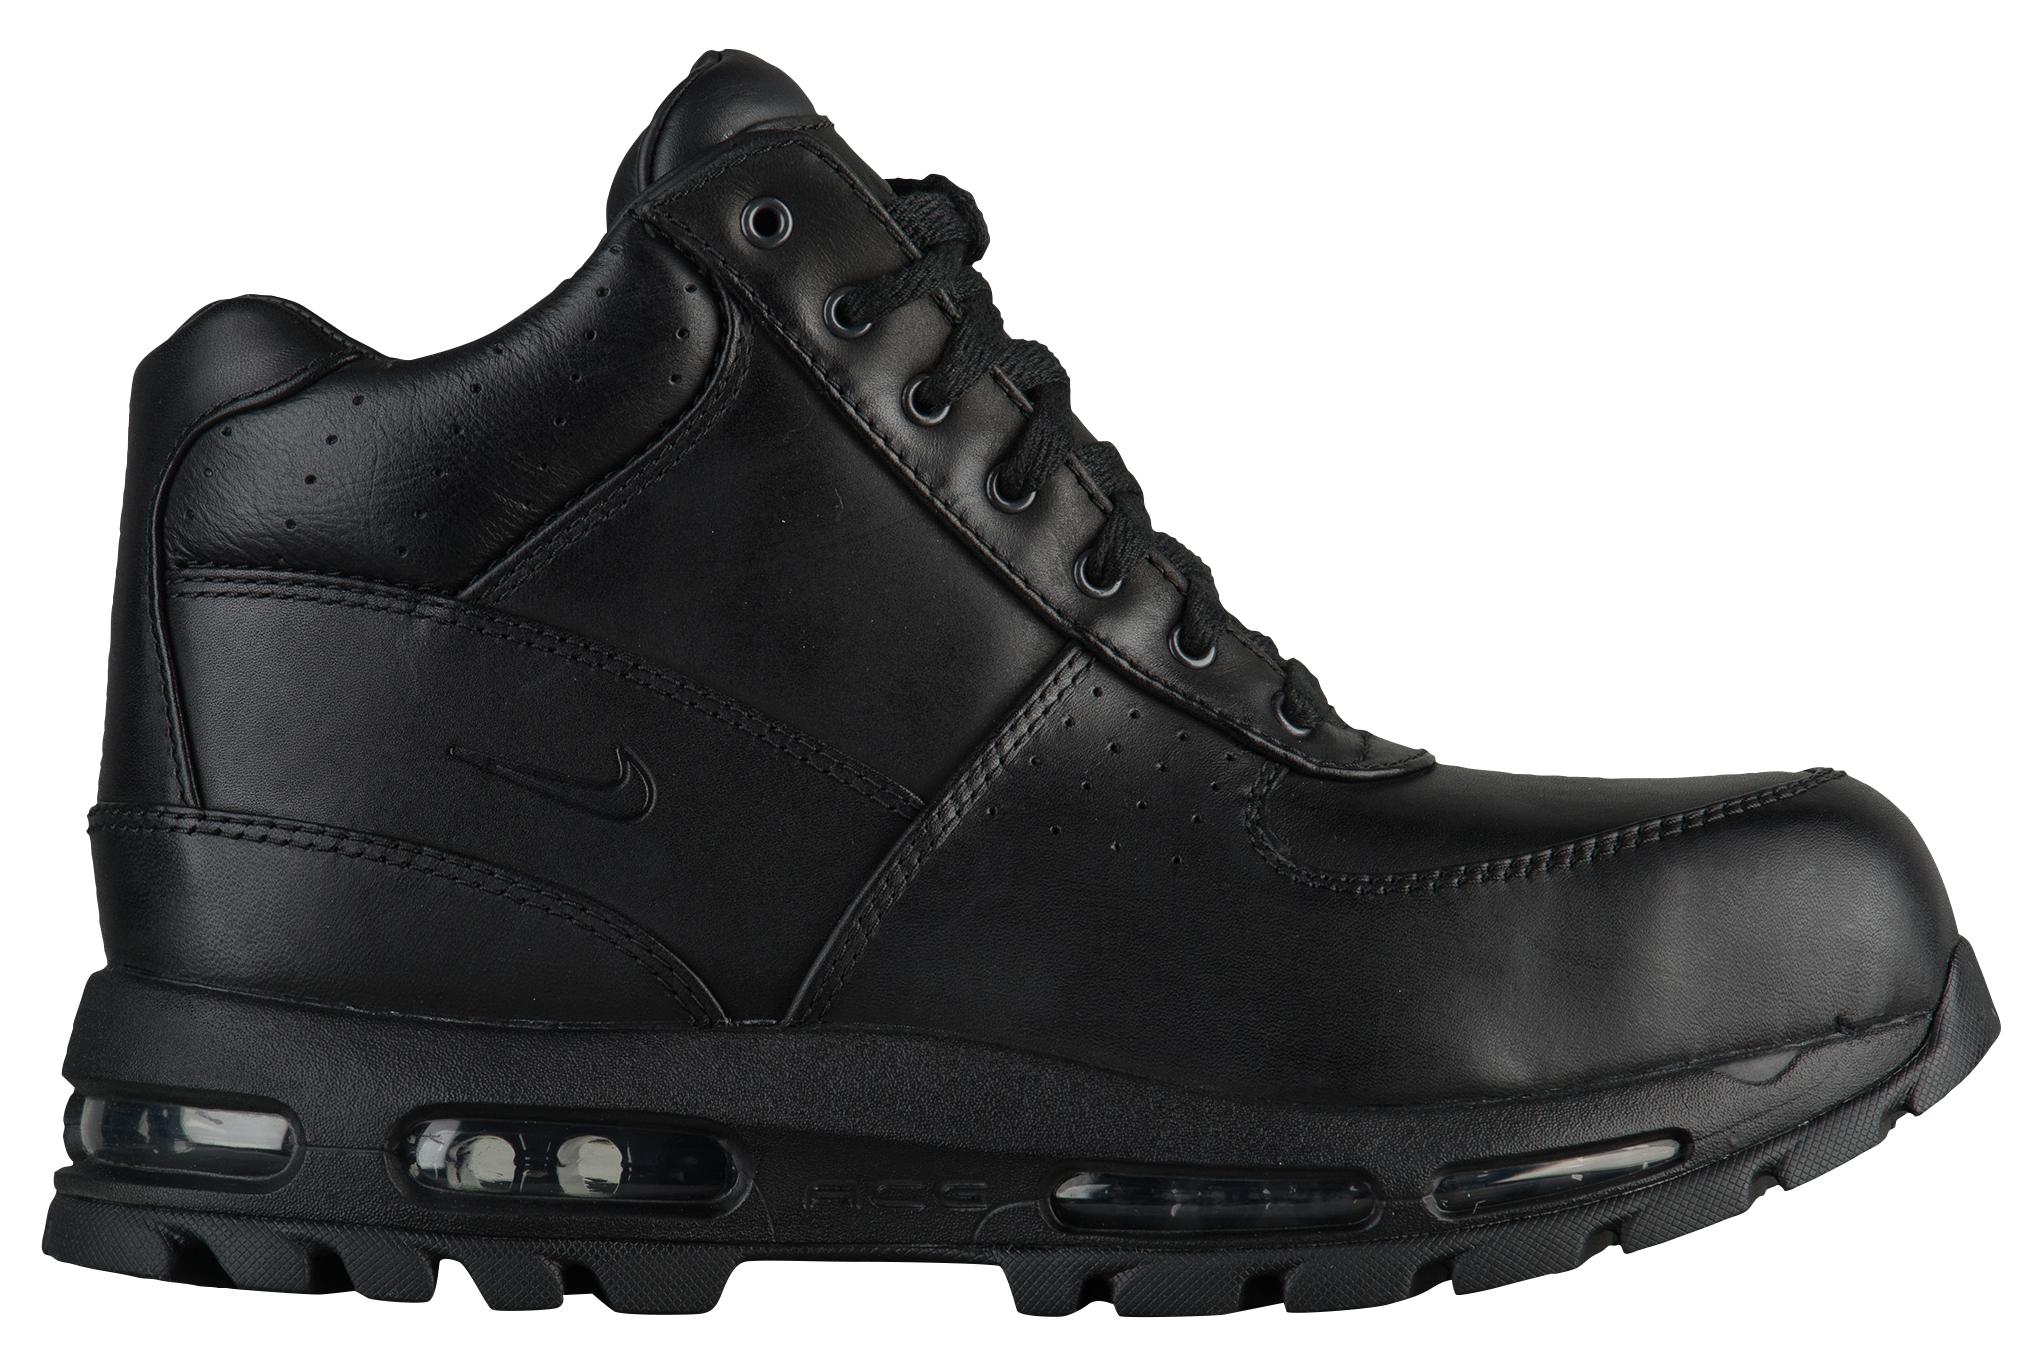 Nike Leather Air Max Goadome Boots in Black/Black/Black (Black 